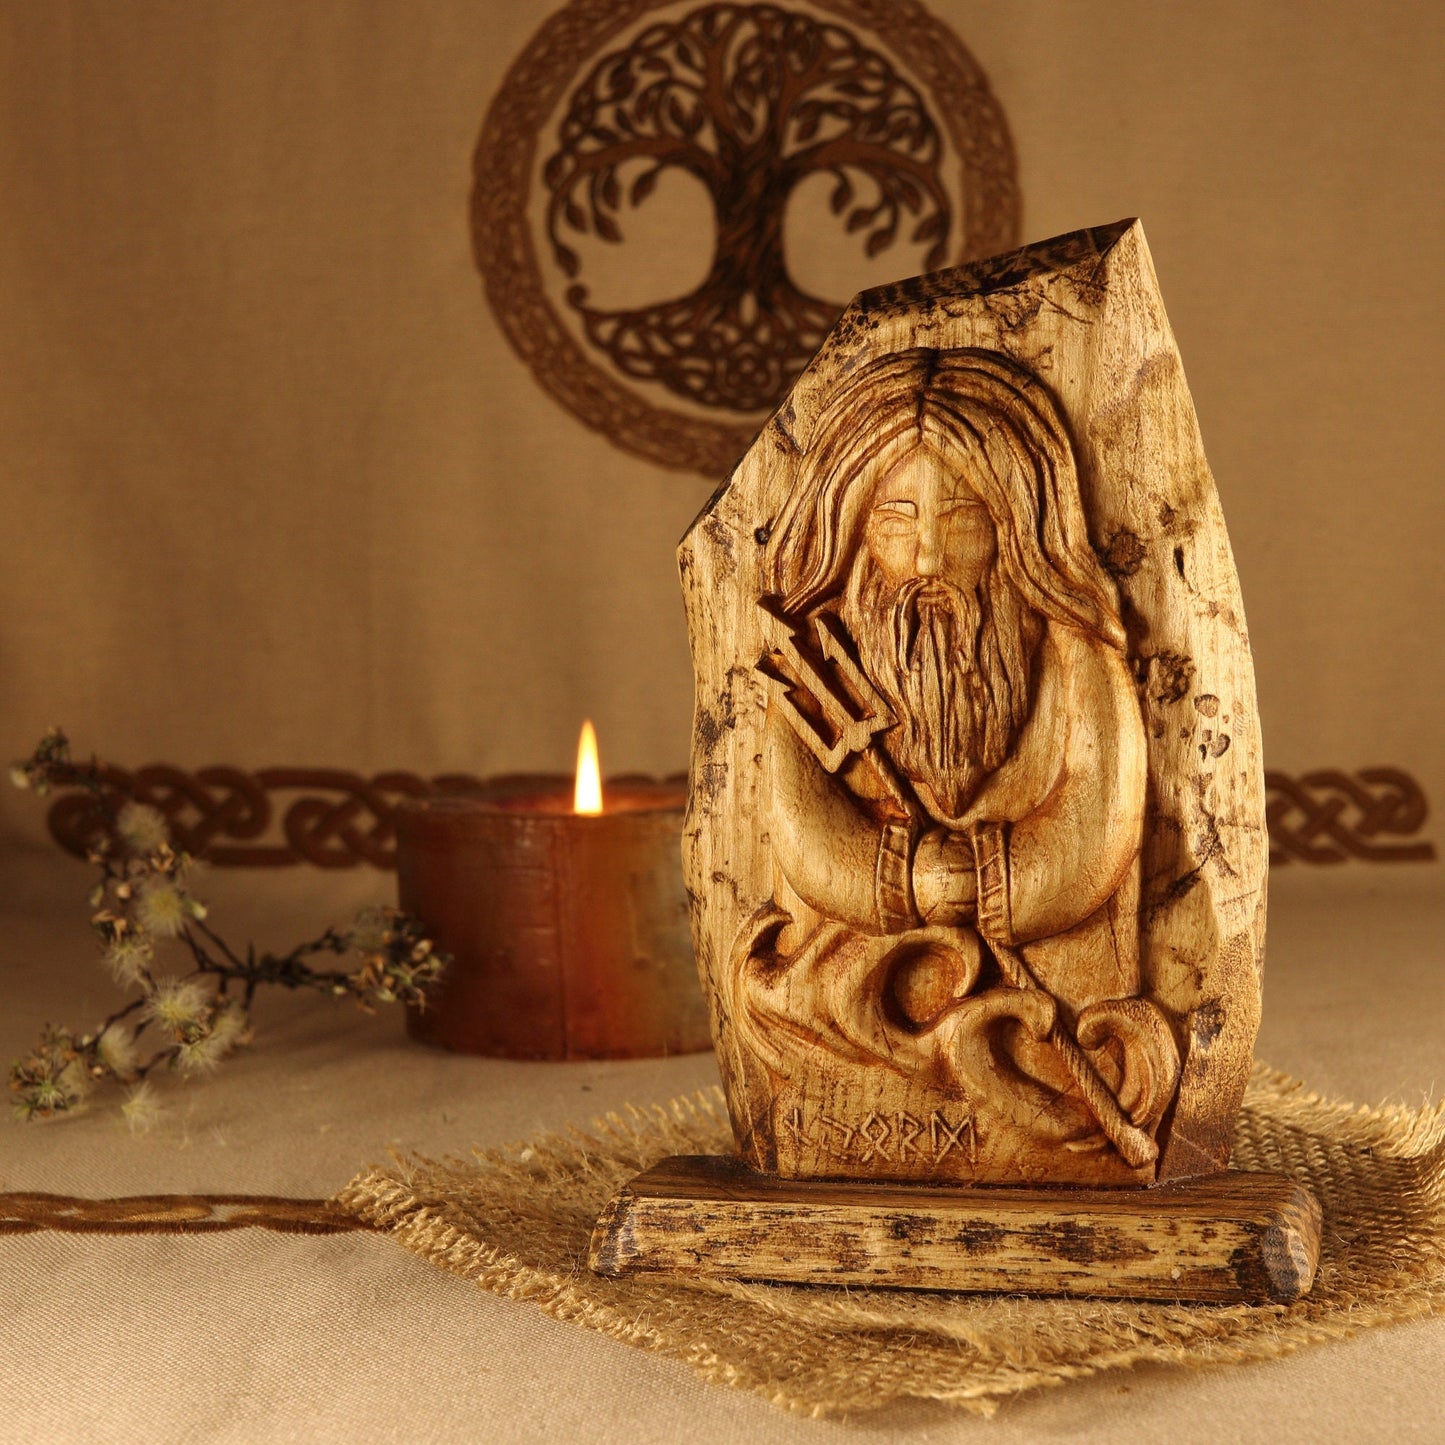 Njord, Wood carving, Wood norsе рagan mini statue